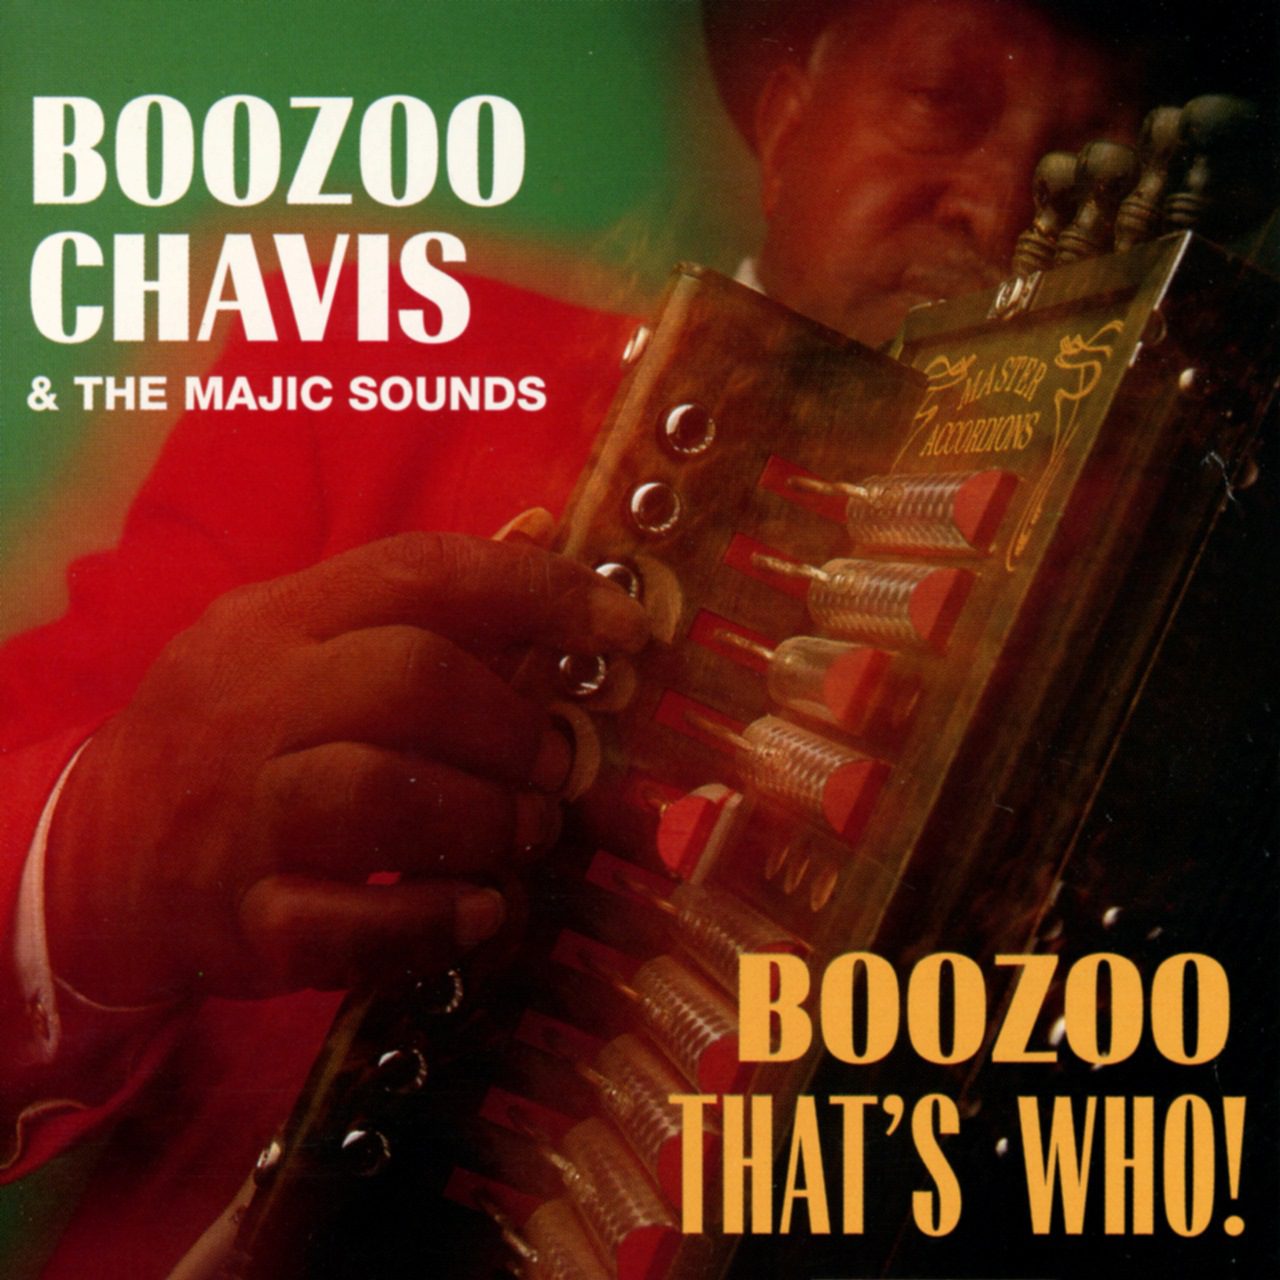 Boozoo Chavis & Majic Sounds - Boozoo, That's Who! cover album